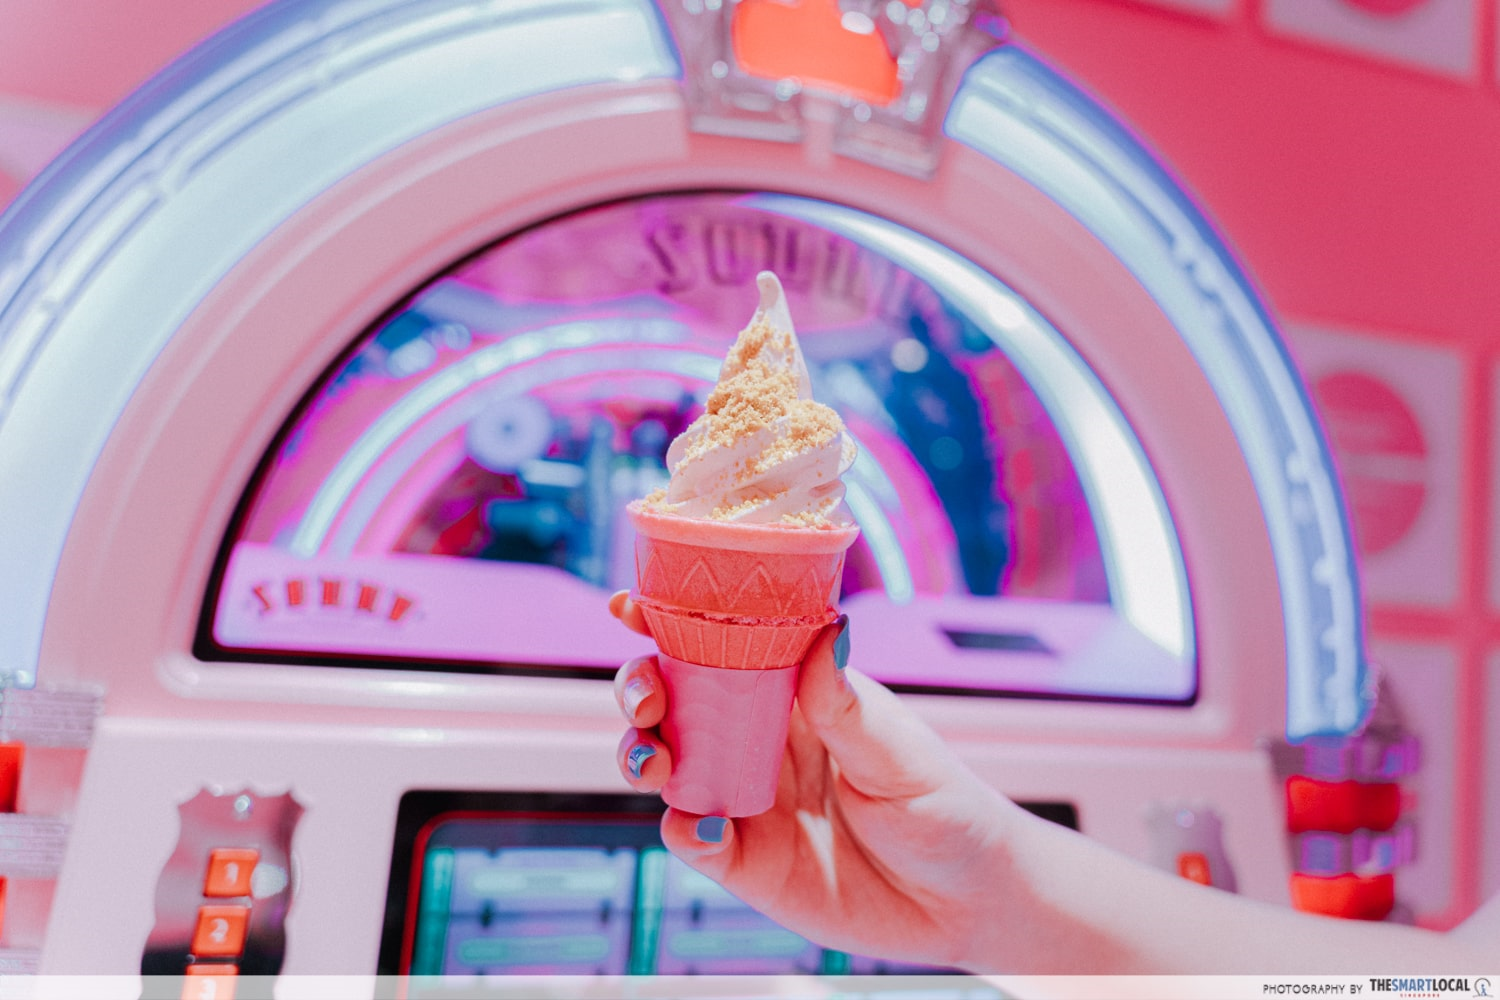 Museum of Ice Cream Singapore - pink ice cream in hand